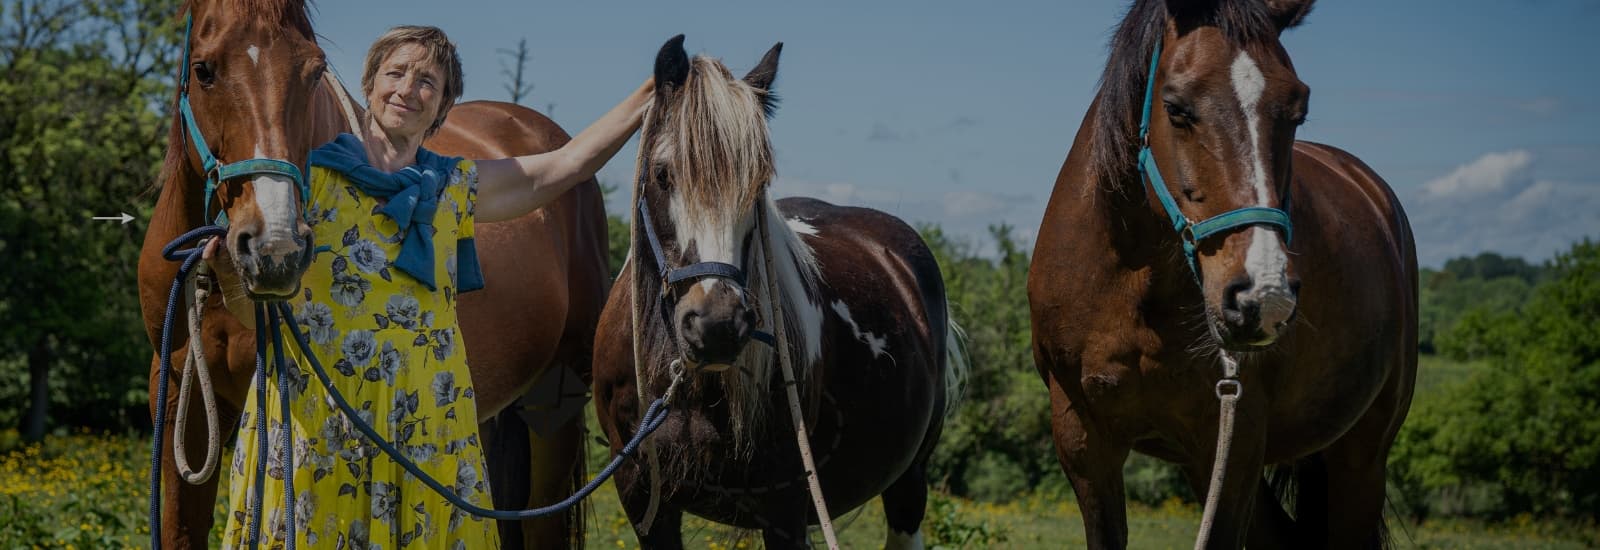 marie-catherine adeline et ses partenaires sophro chevaux